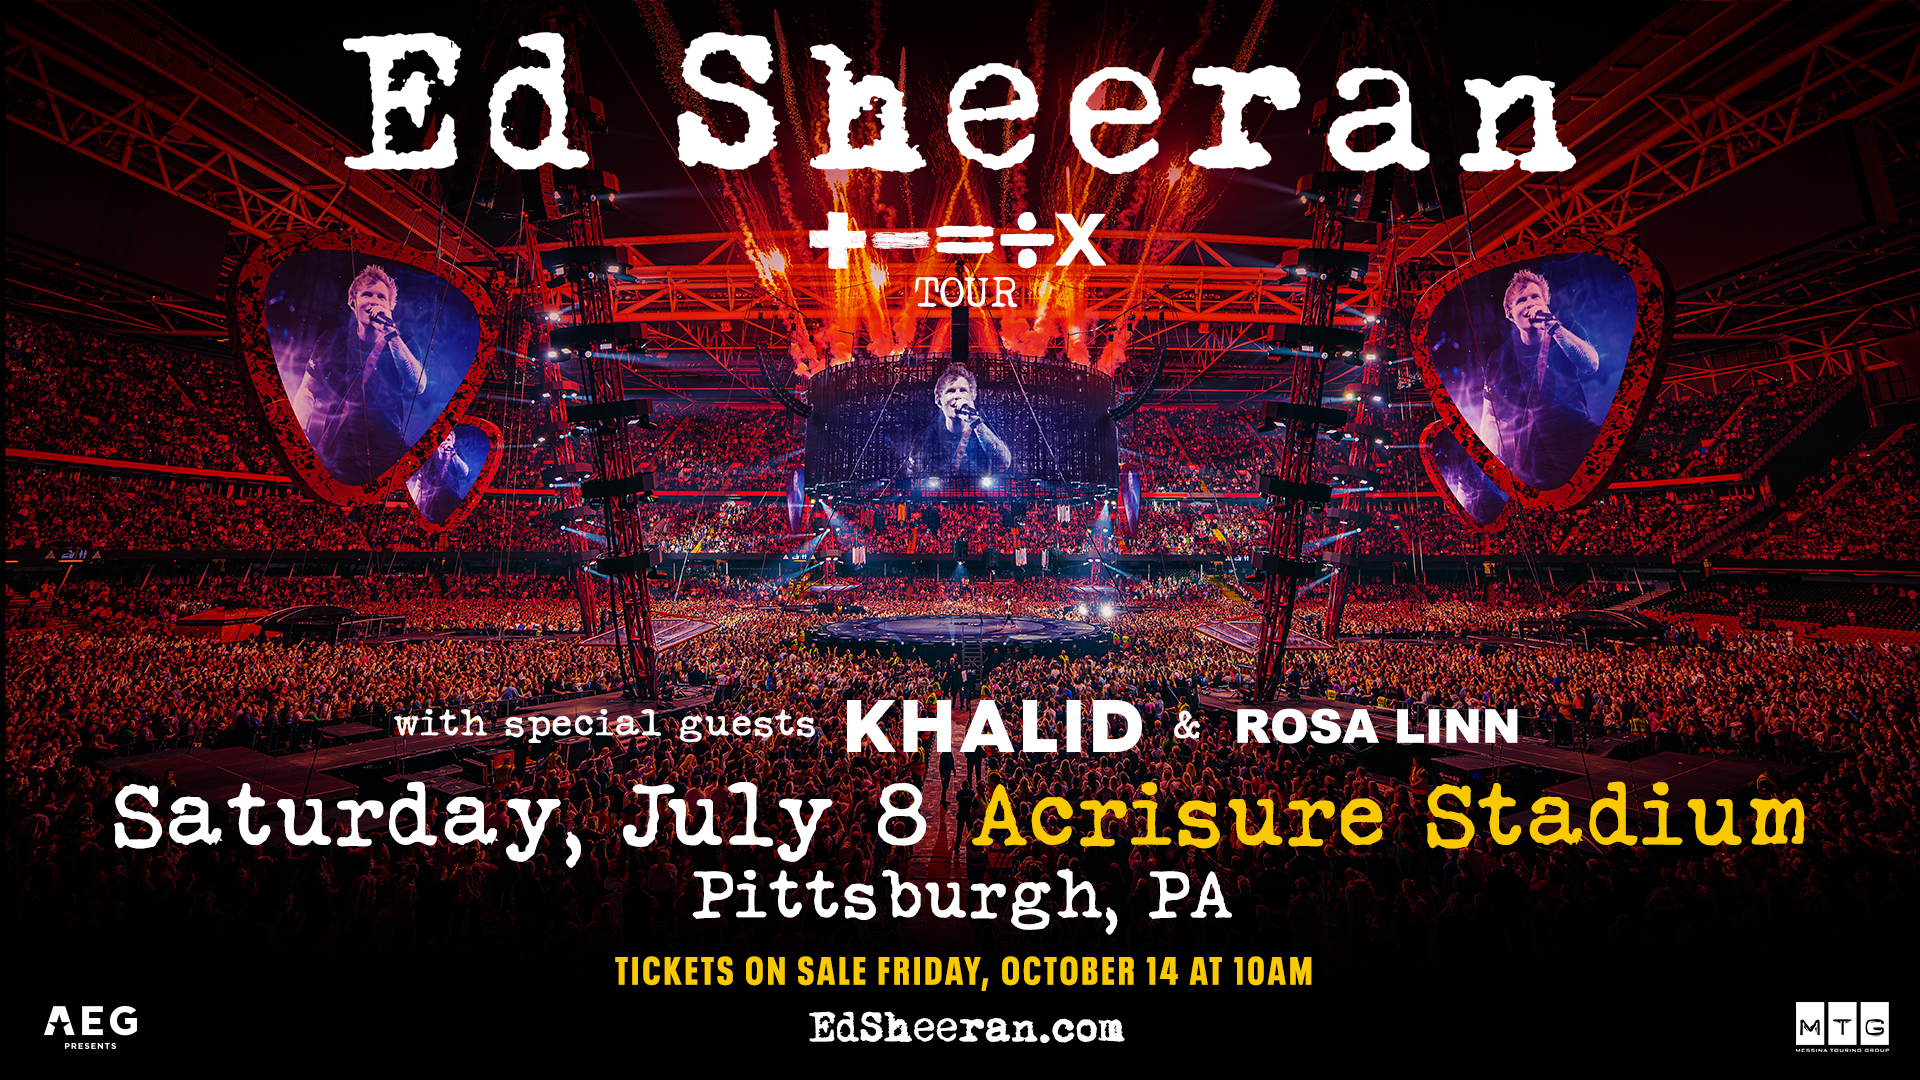 Ed Sheeran's Mathematics Tour 2023 - Saturday, July 8, 2023 at Acrisure Stadium